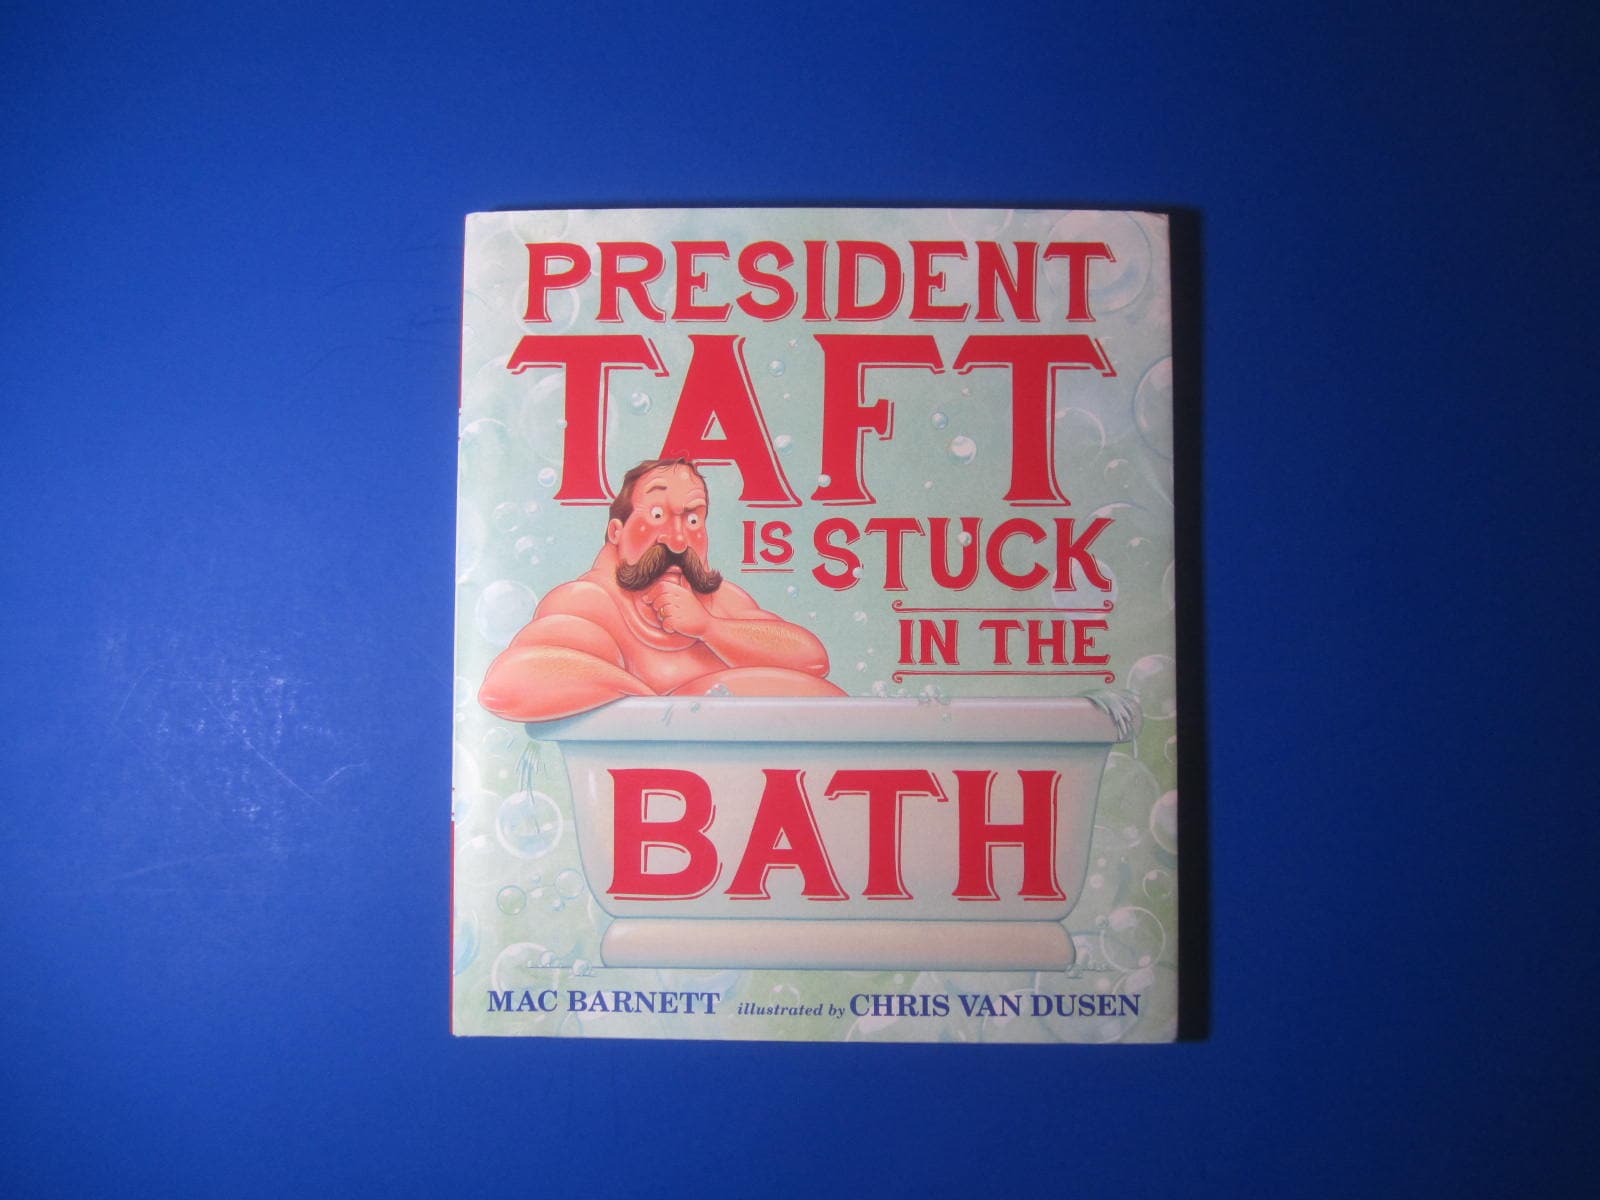 President Taft is Stuck in the Bath by Mac Barnett, illustrated by Chris Van Dusen